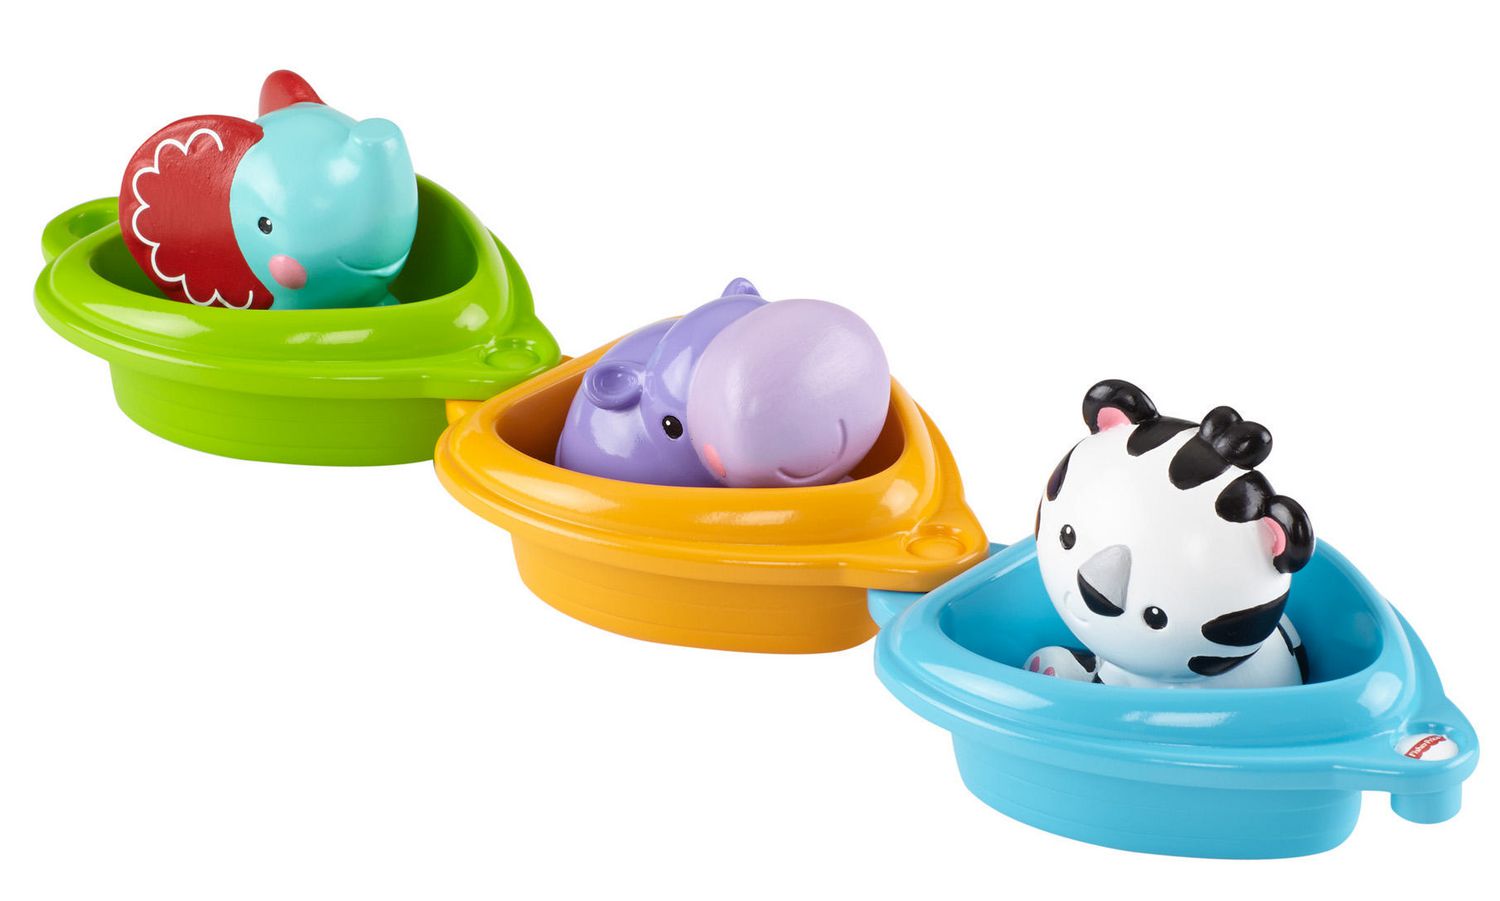 fisher price bathtub toys